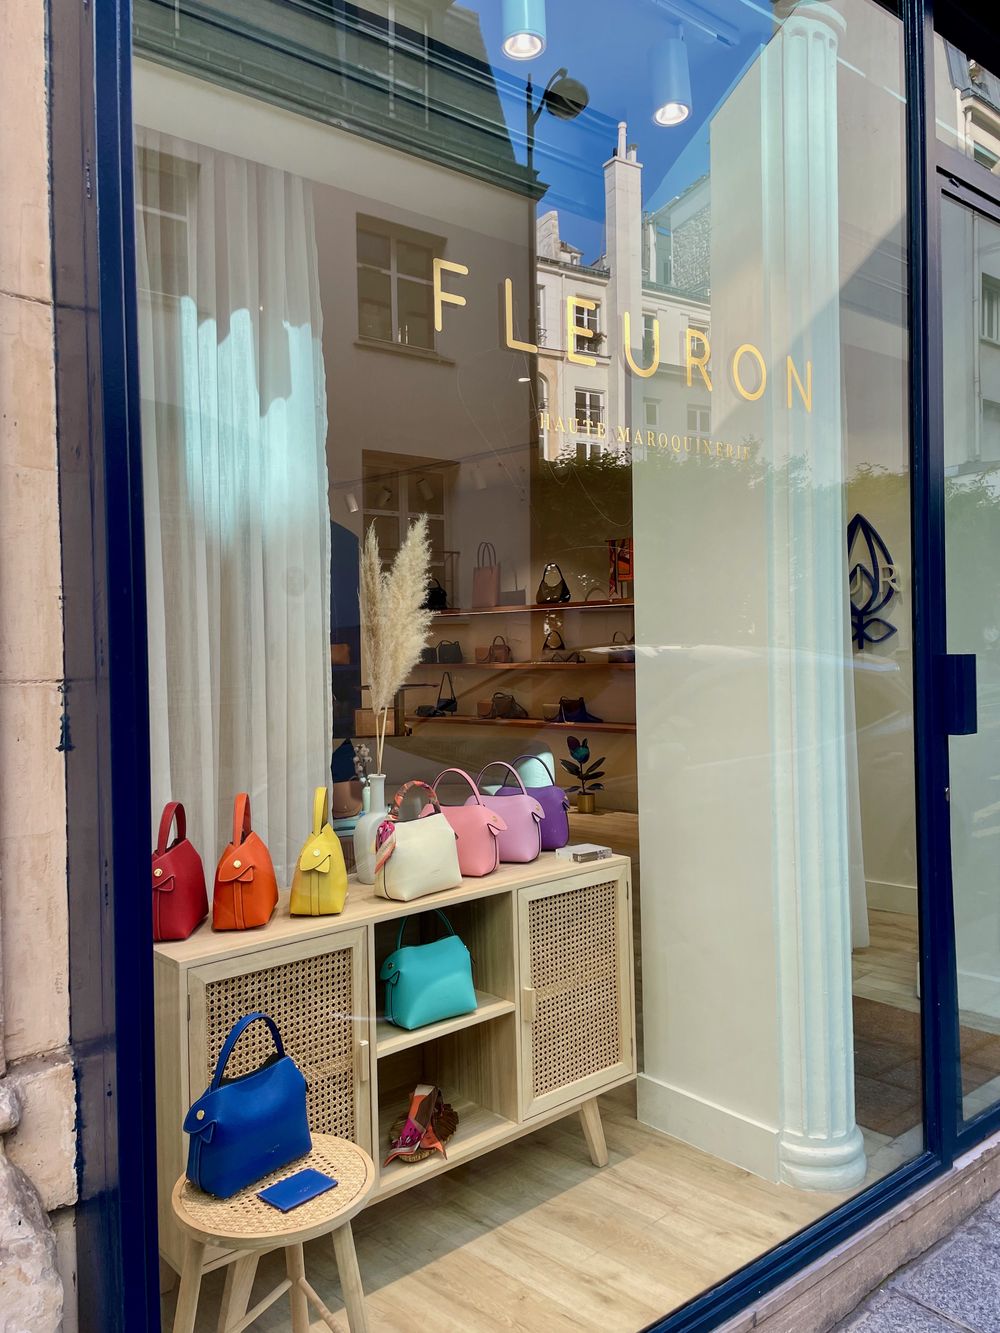 Fleuron Paris handbags Review